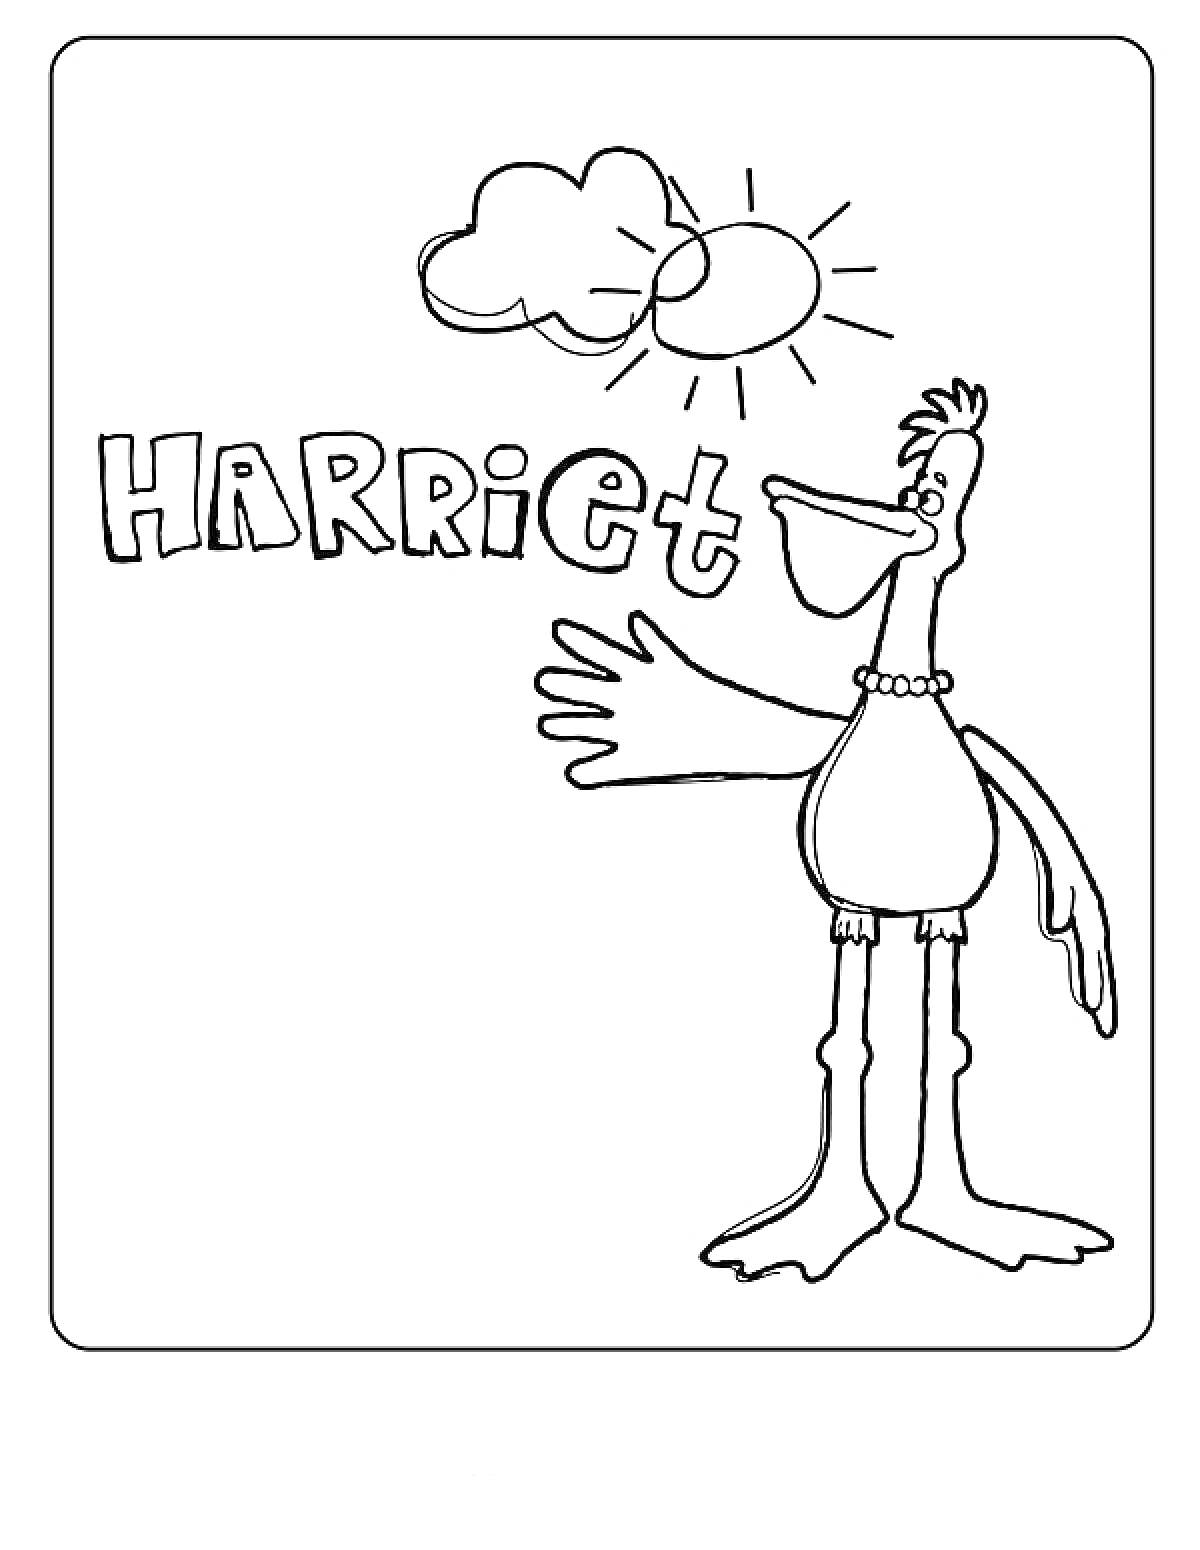 Раскраска Утка с ожерельем под именем Харриет на фоне облака с солнцем